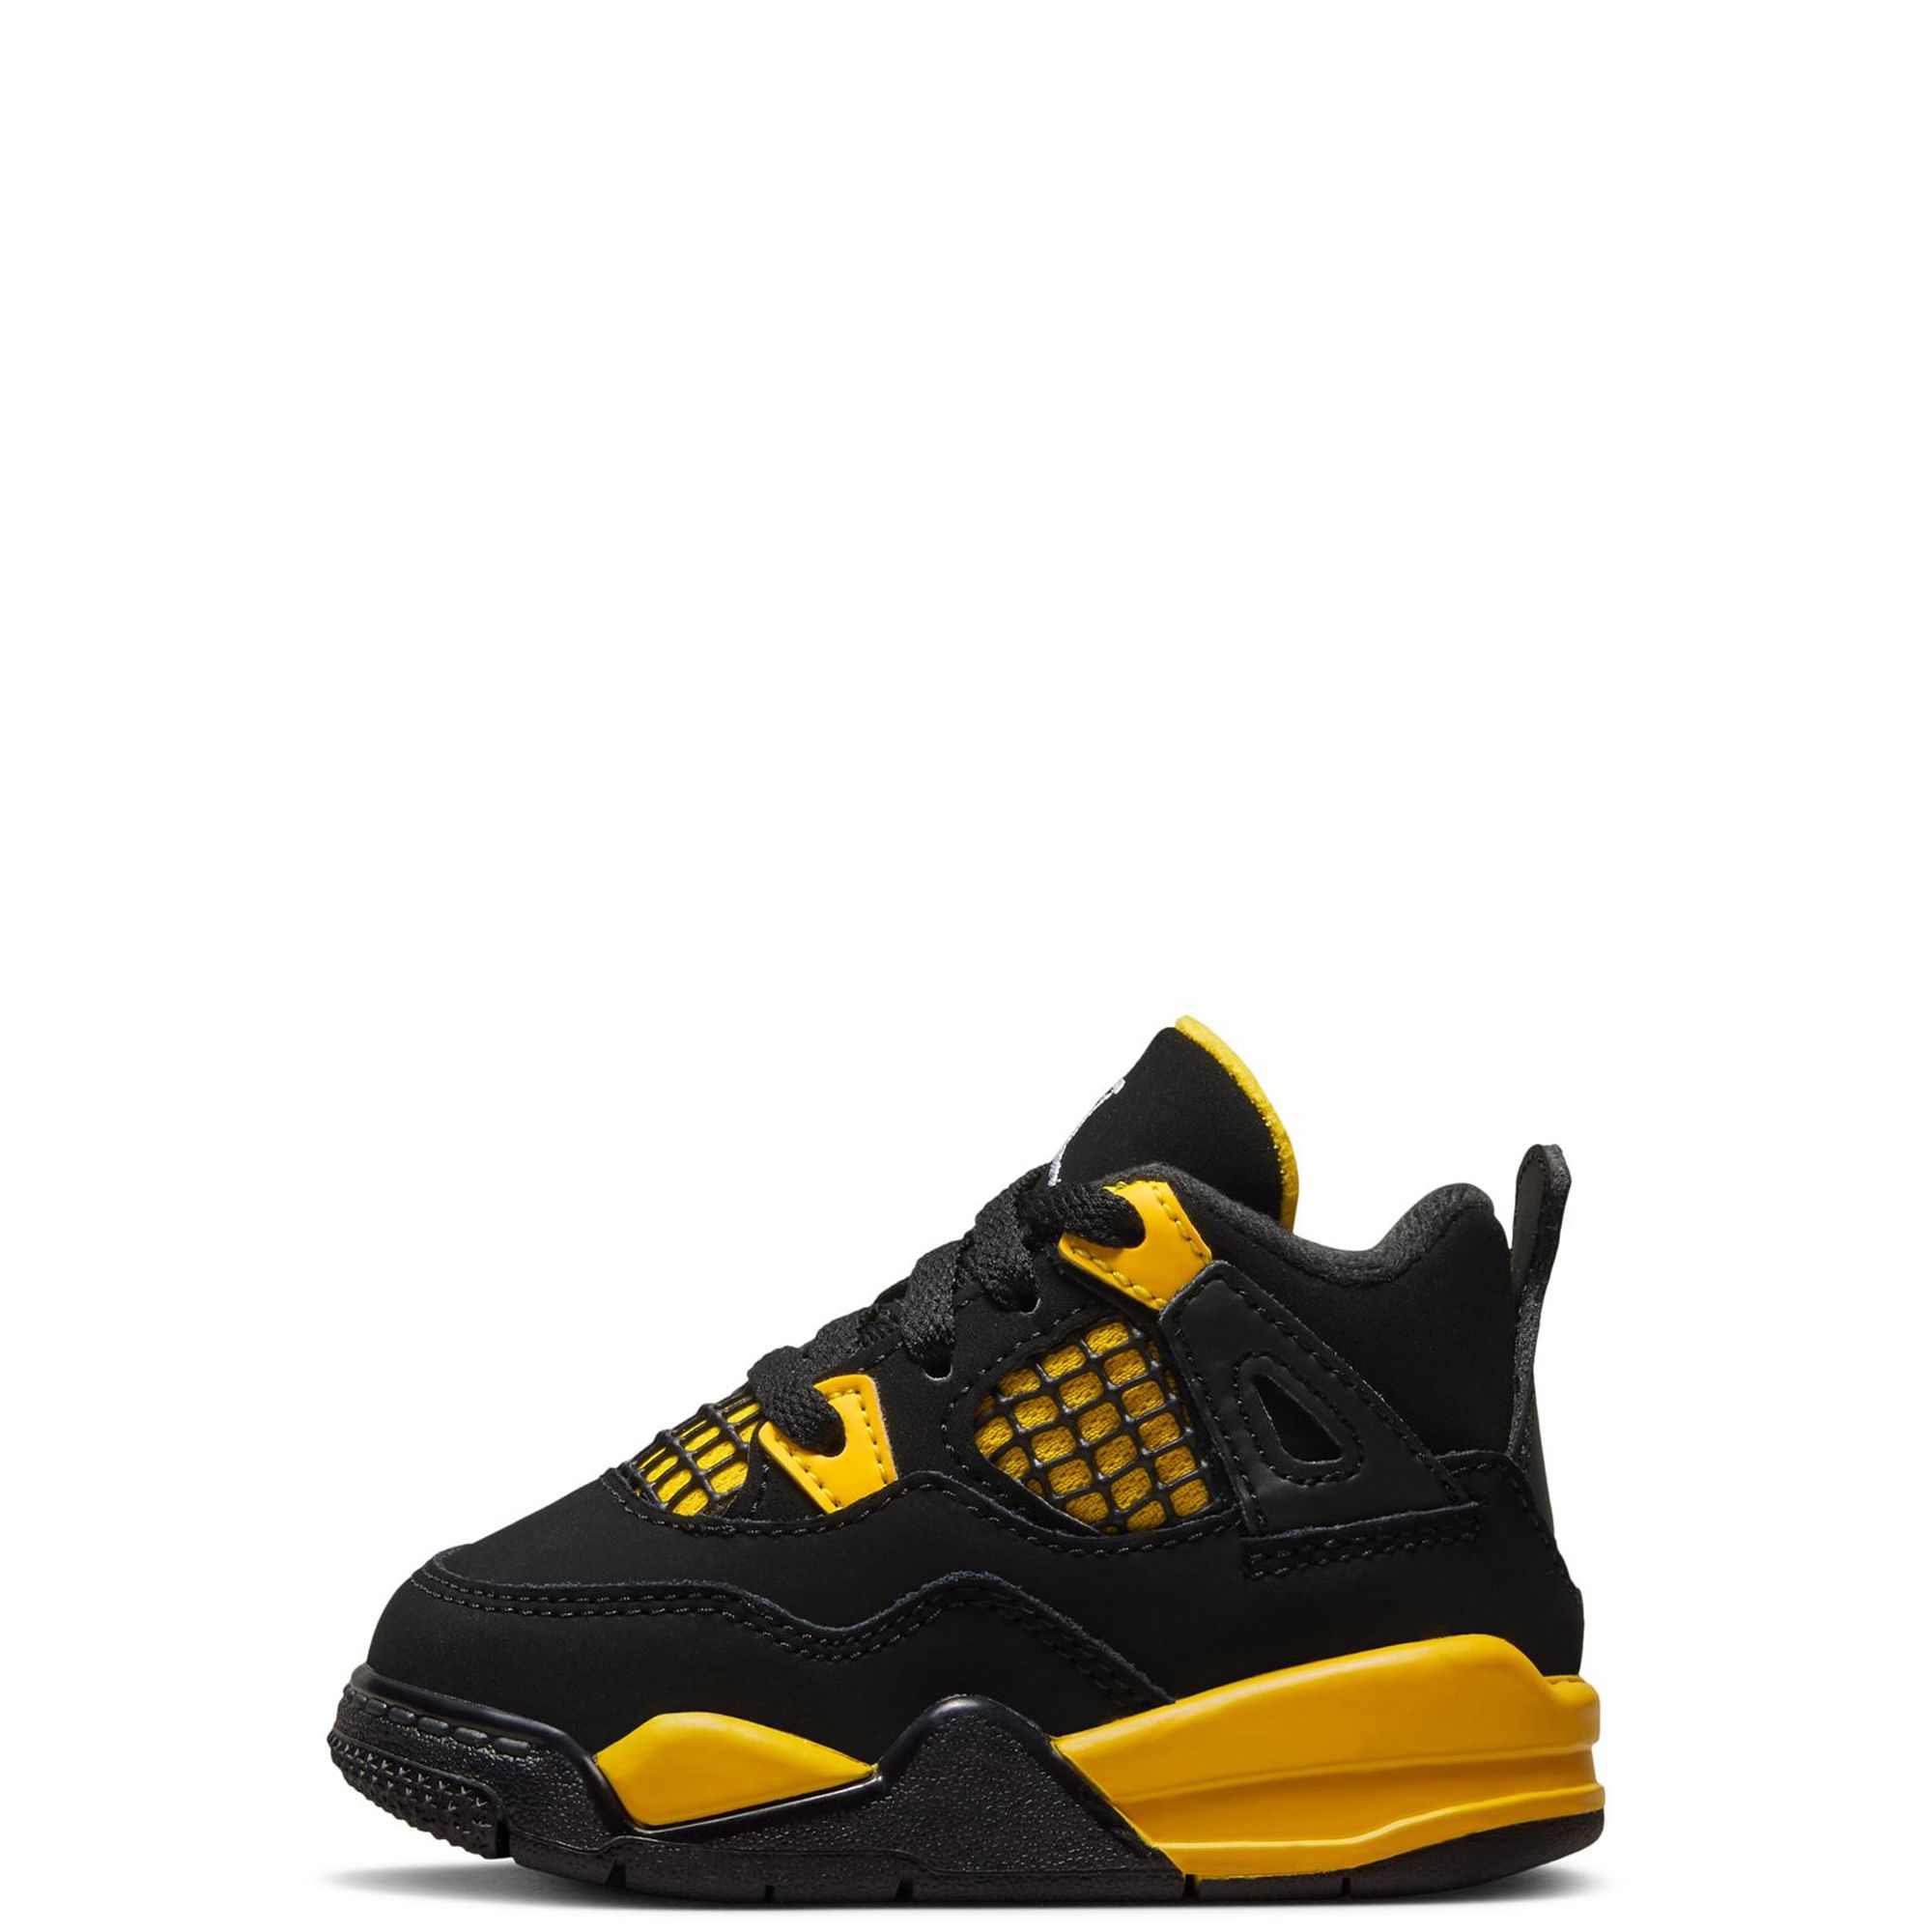 Nike Air Jordan 4 Retro TD 'Black Cat' BQ7670-010 Little Kids Size 10C